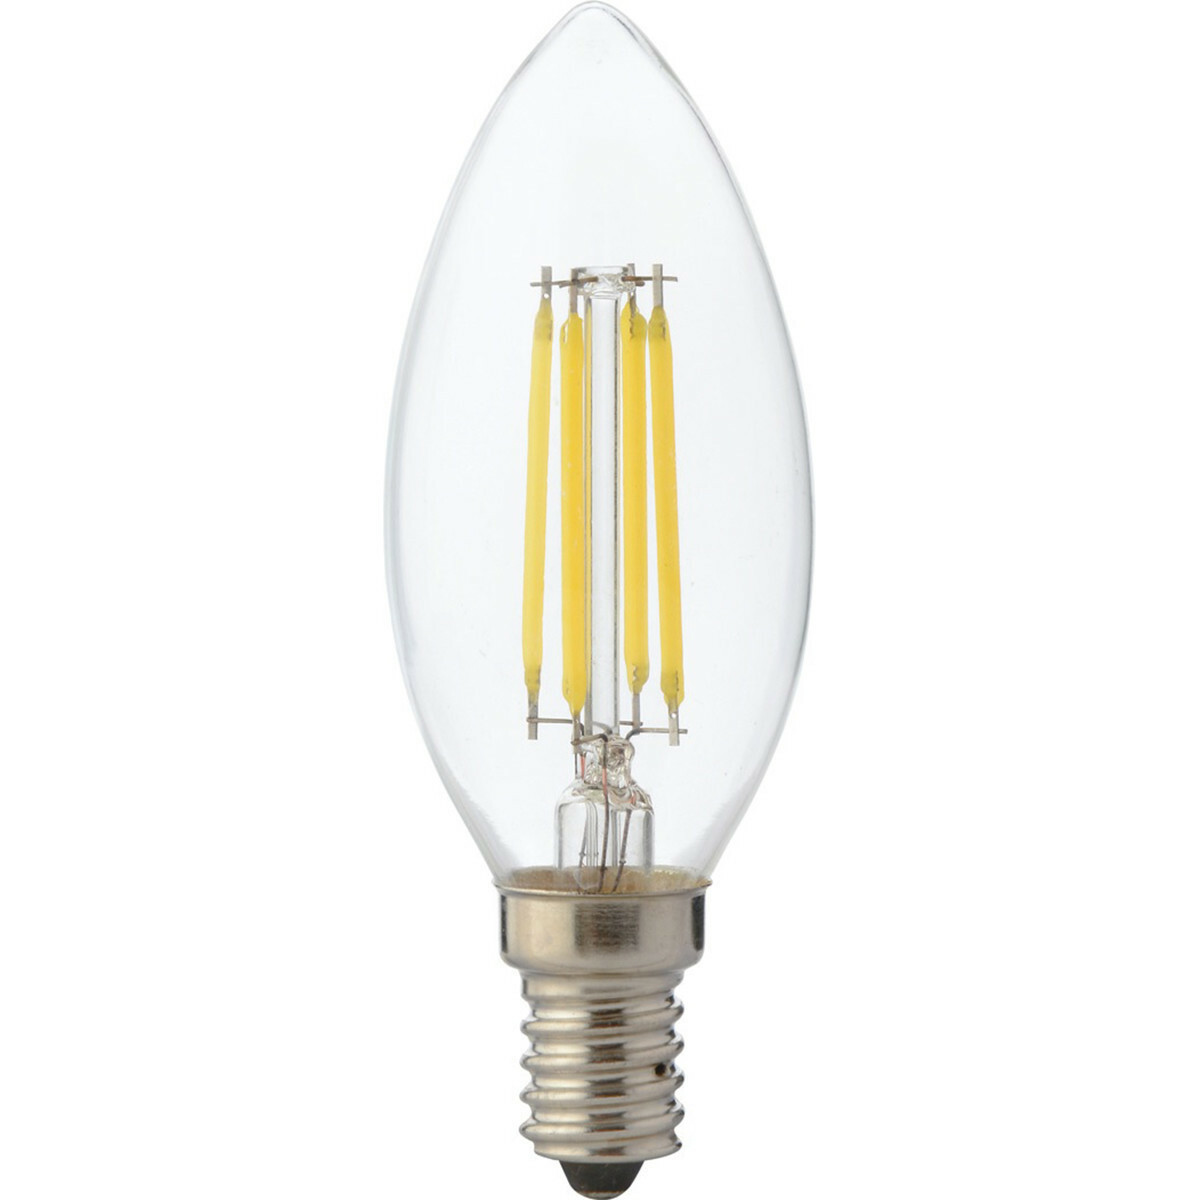 Aandringen Minimaliseren Kinematica LED Lamp - Kaarslamp - Filament - E14 Fitting - 6W Dimbaar - Warm Wit 2700K  | BES LED